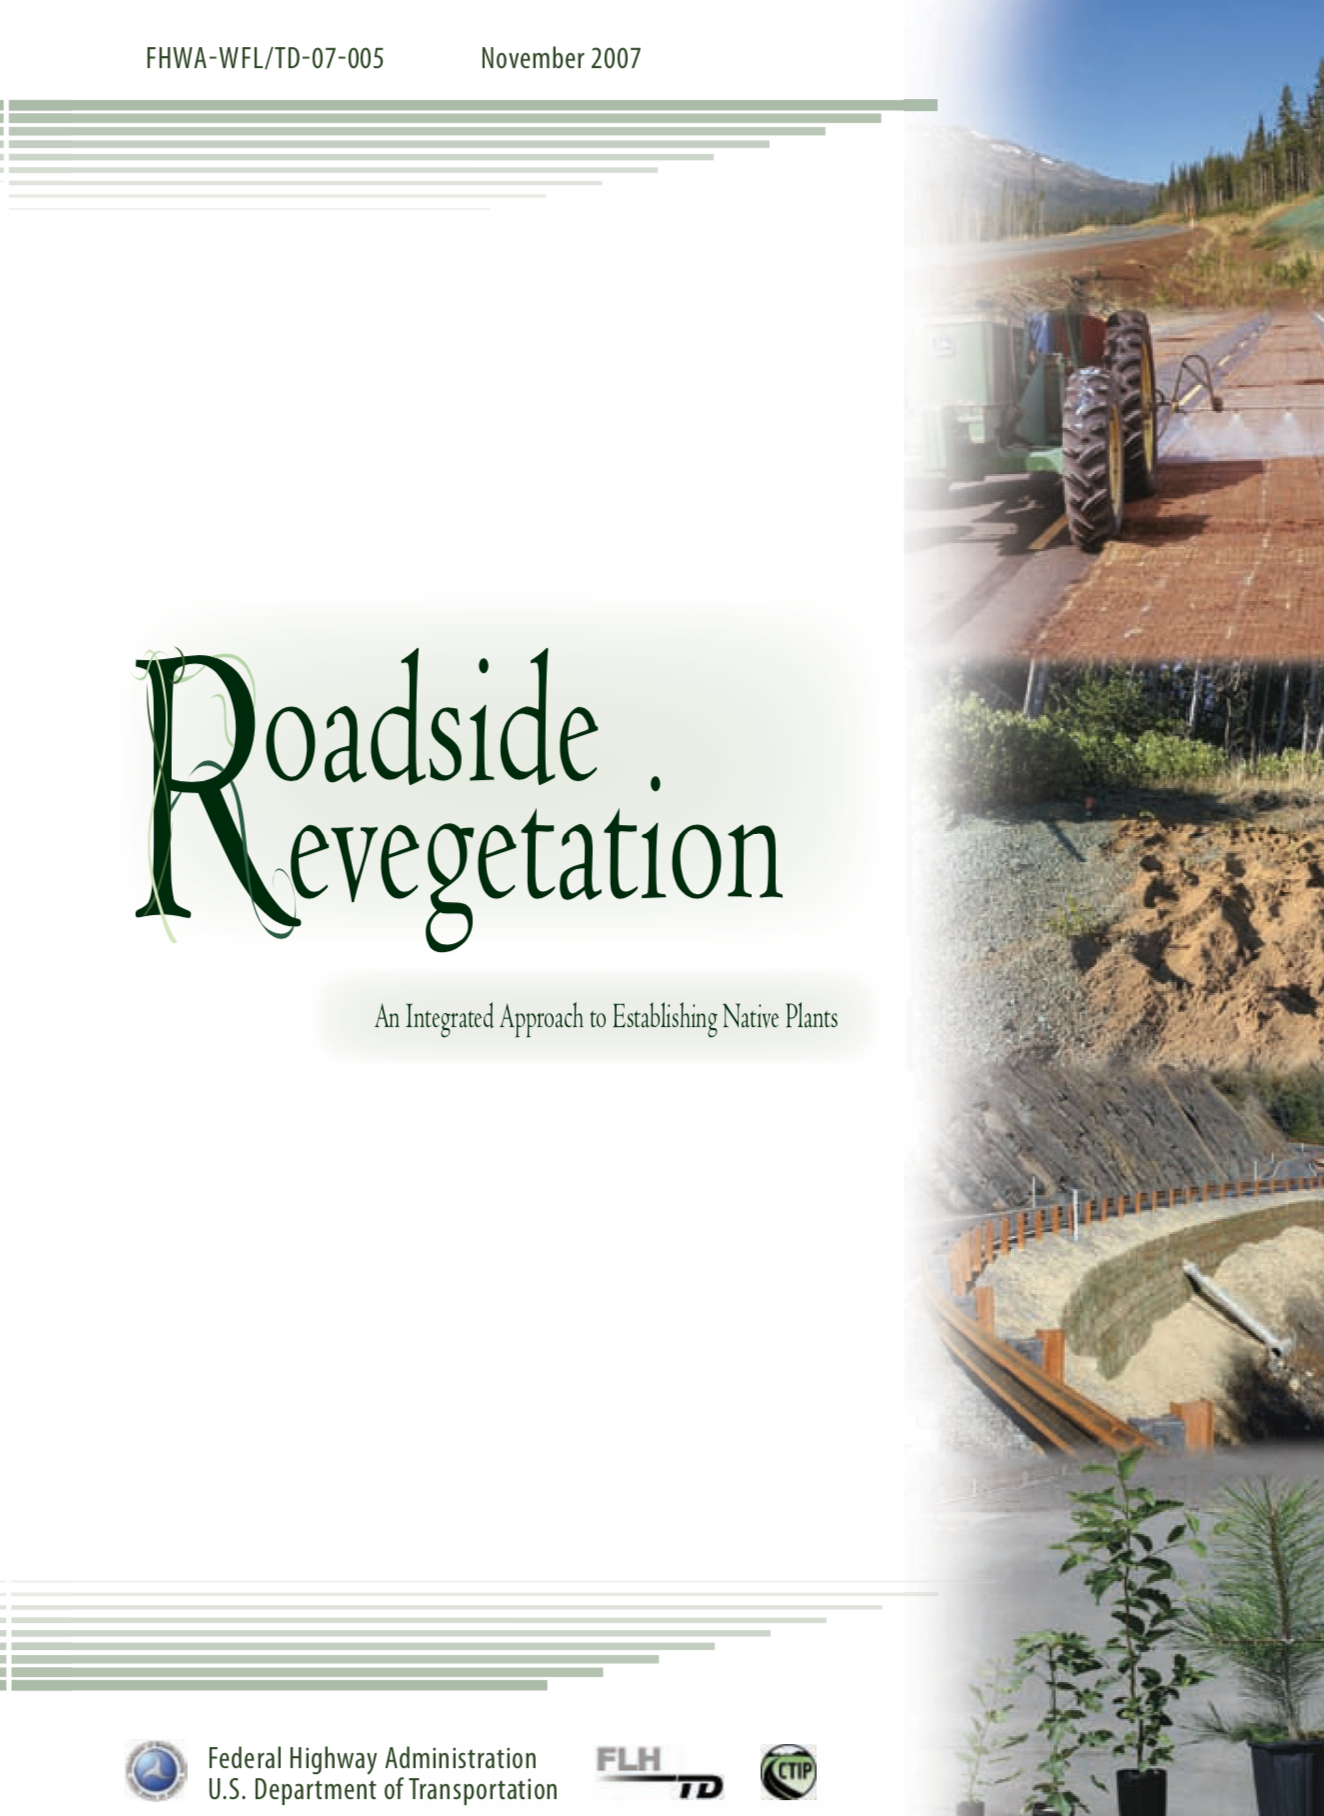 Roadside Revegetation [PUB]